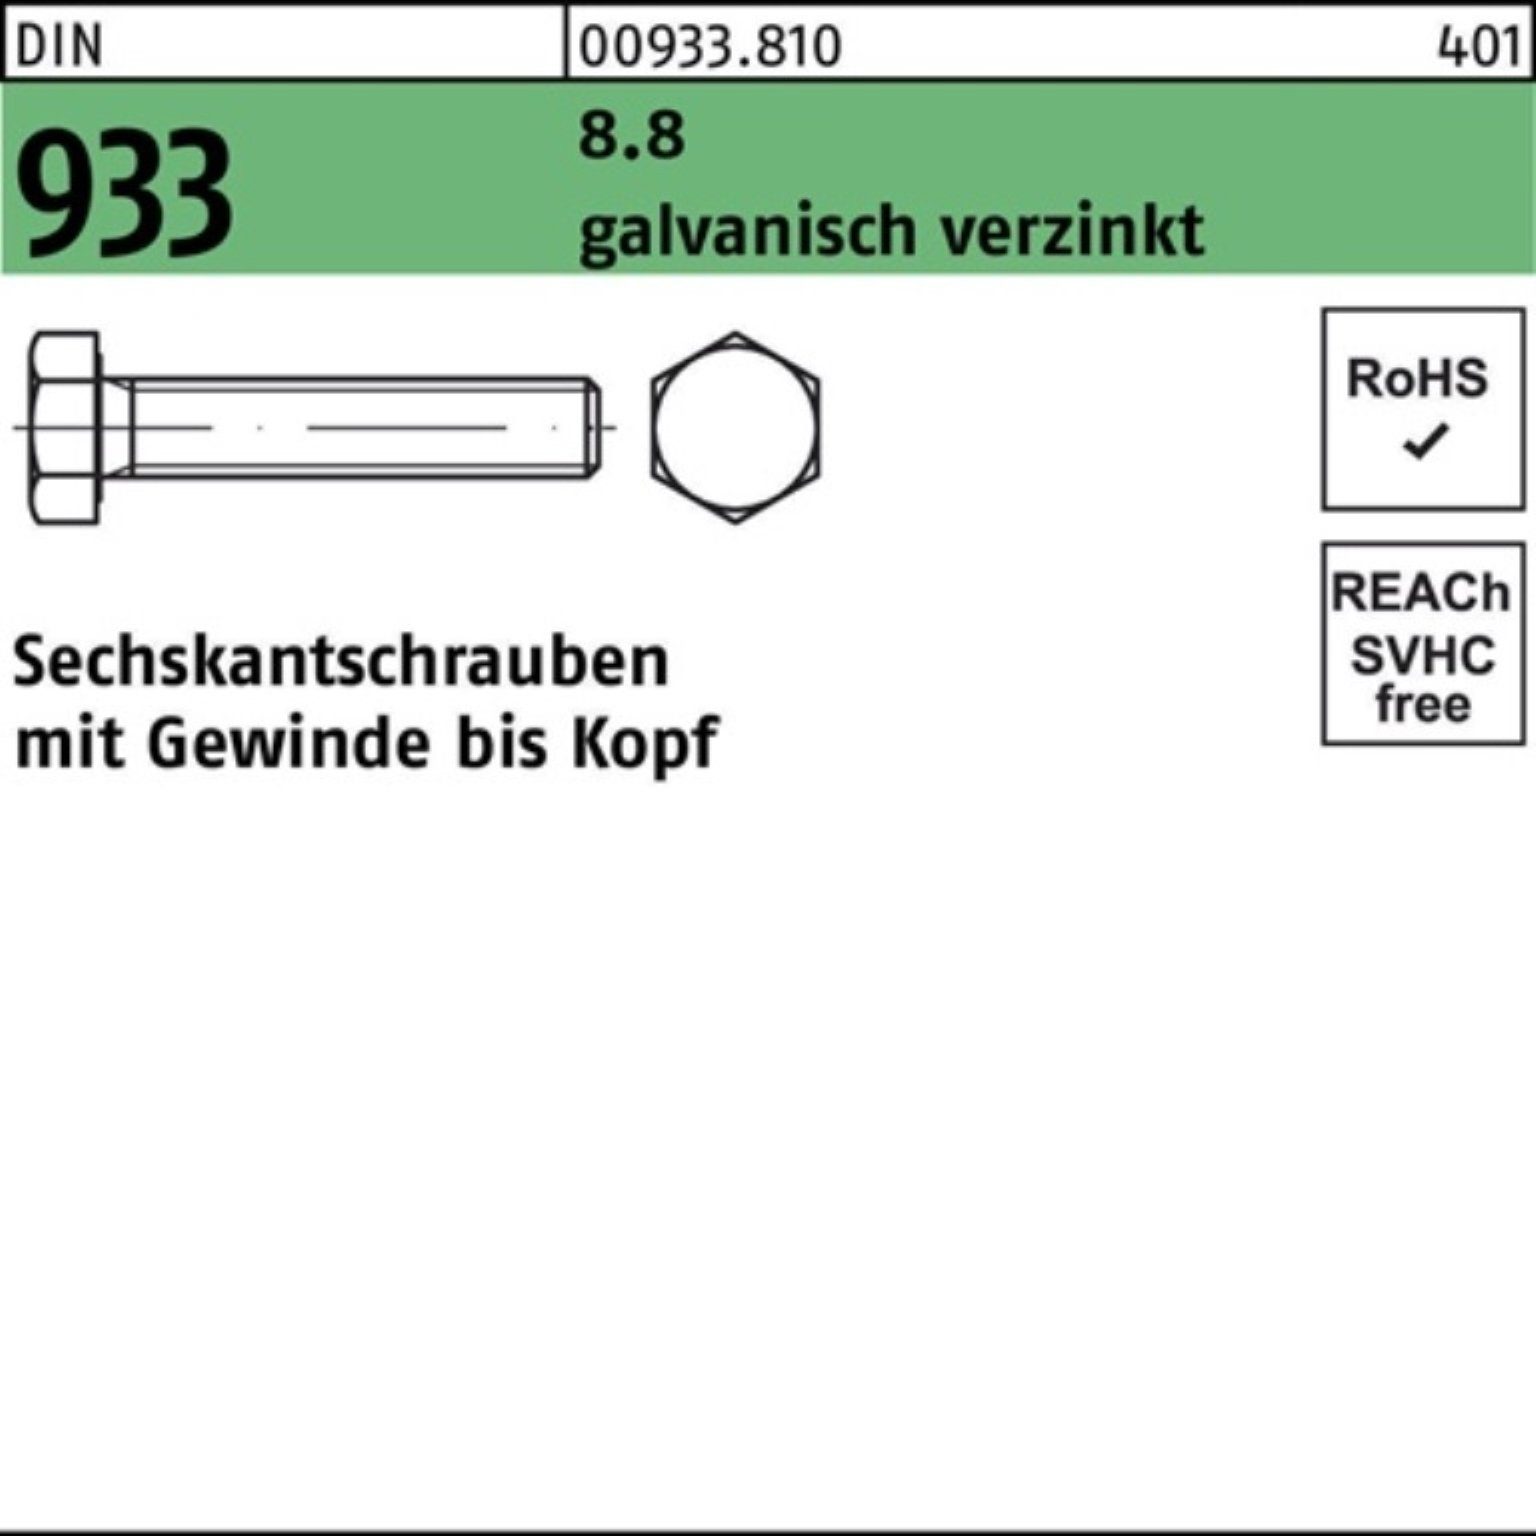 M4x VG 100er 35 Stü DIN Sechskantschraube 933 galv.verz. Reyher Sechskantschraube Pack 8.8 100